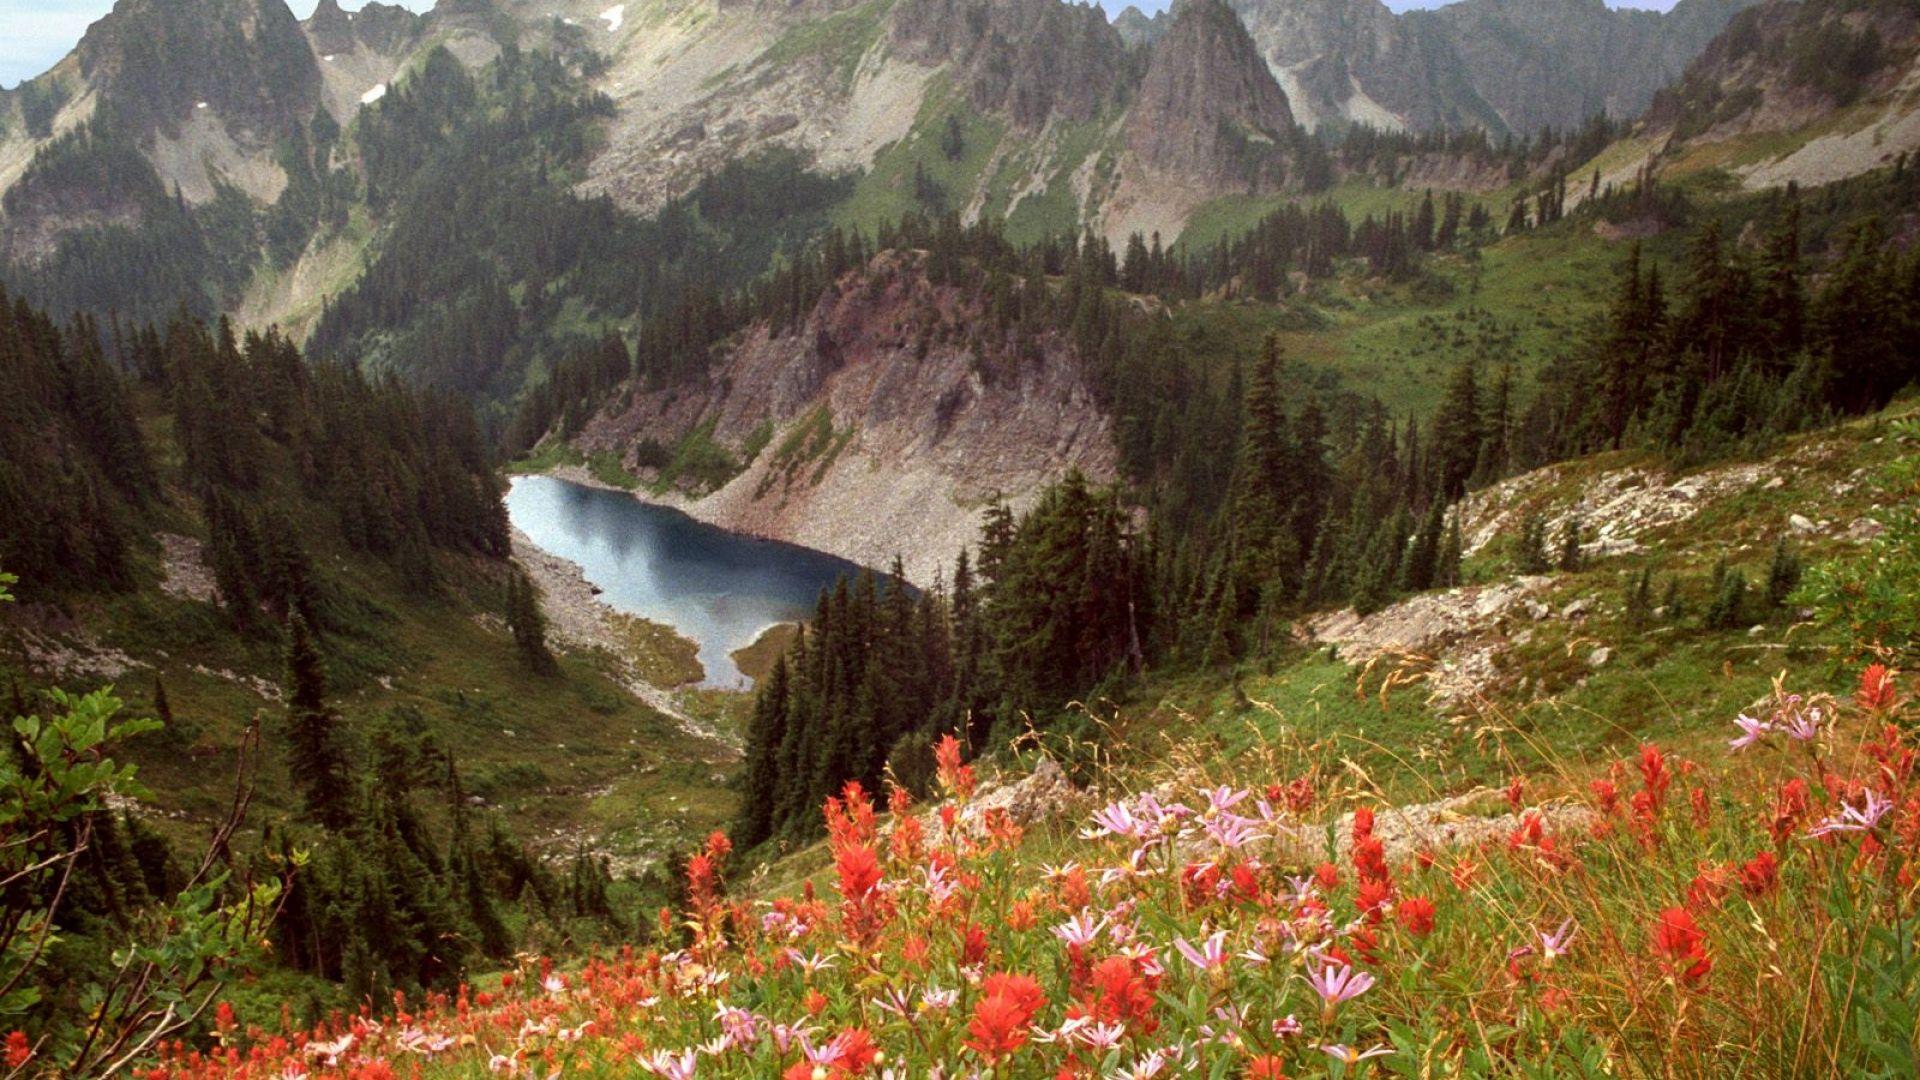 Download Wallpaper 1920x1080 cliff lake, idaho, mountains, flowers